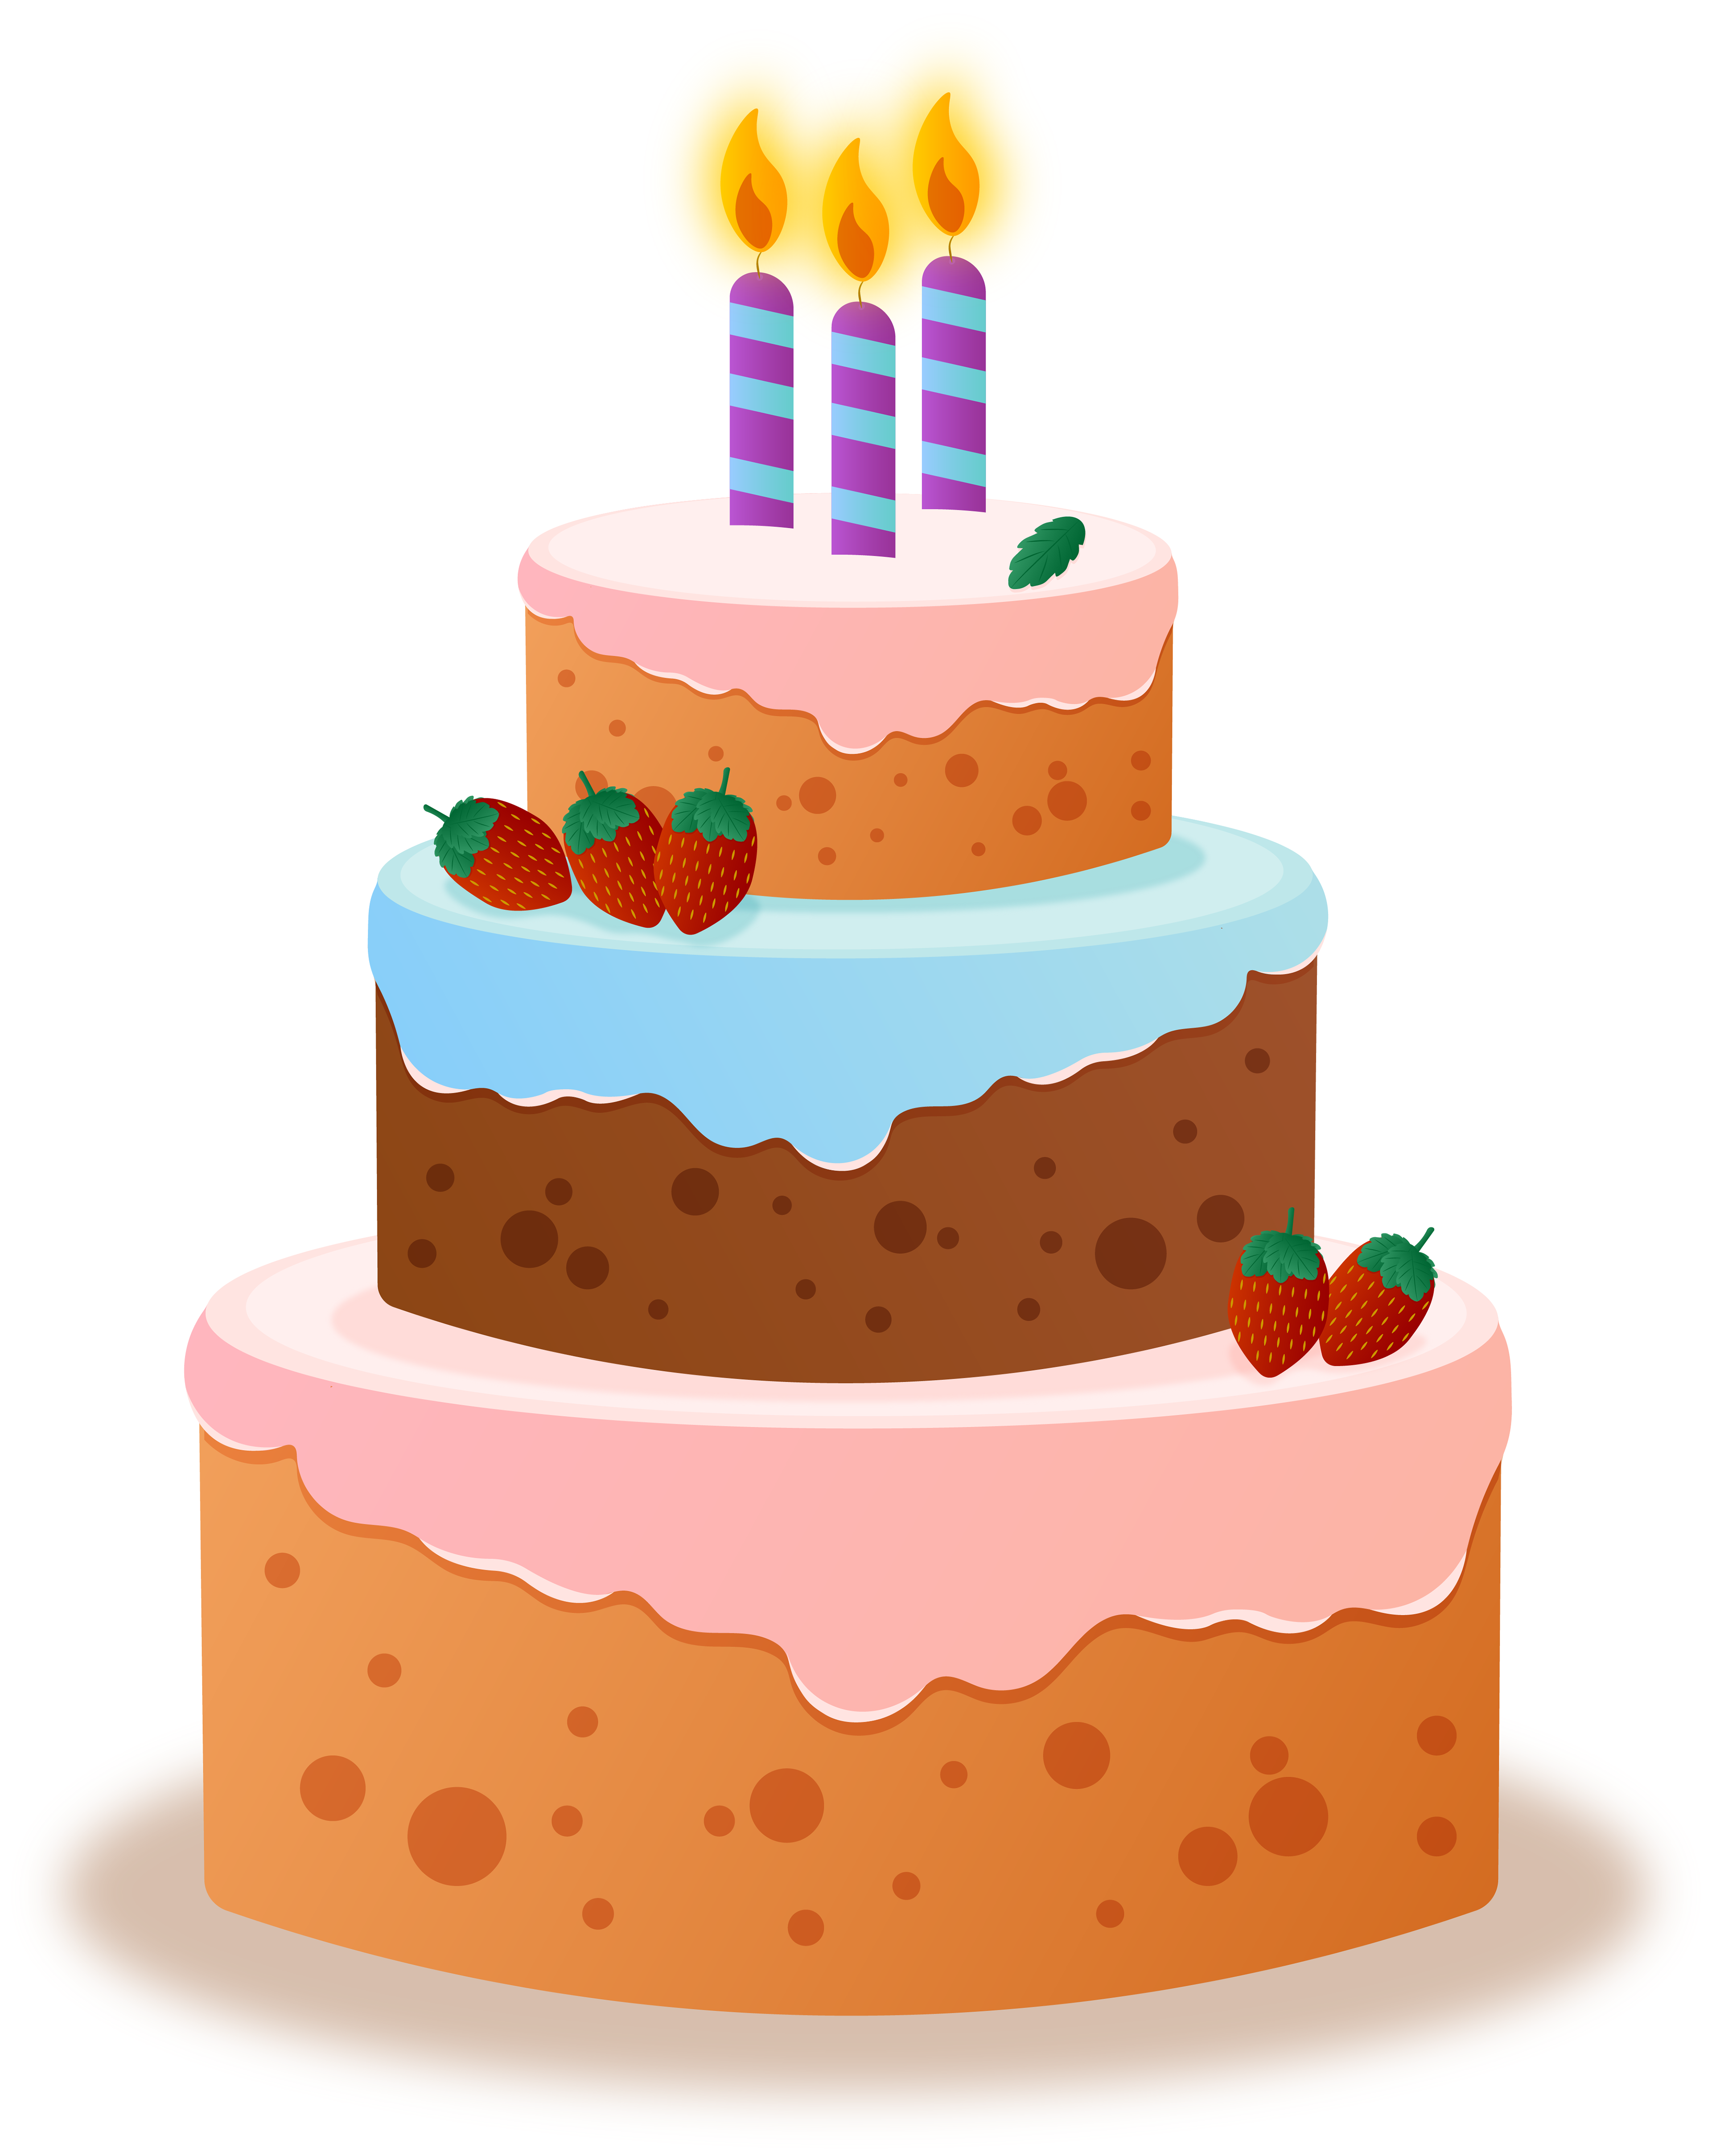 My birthday cake on Behance